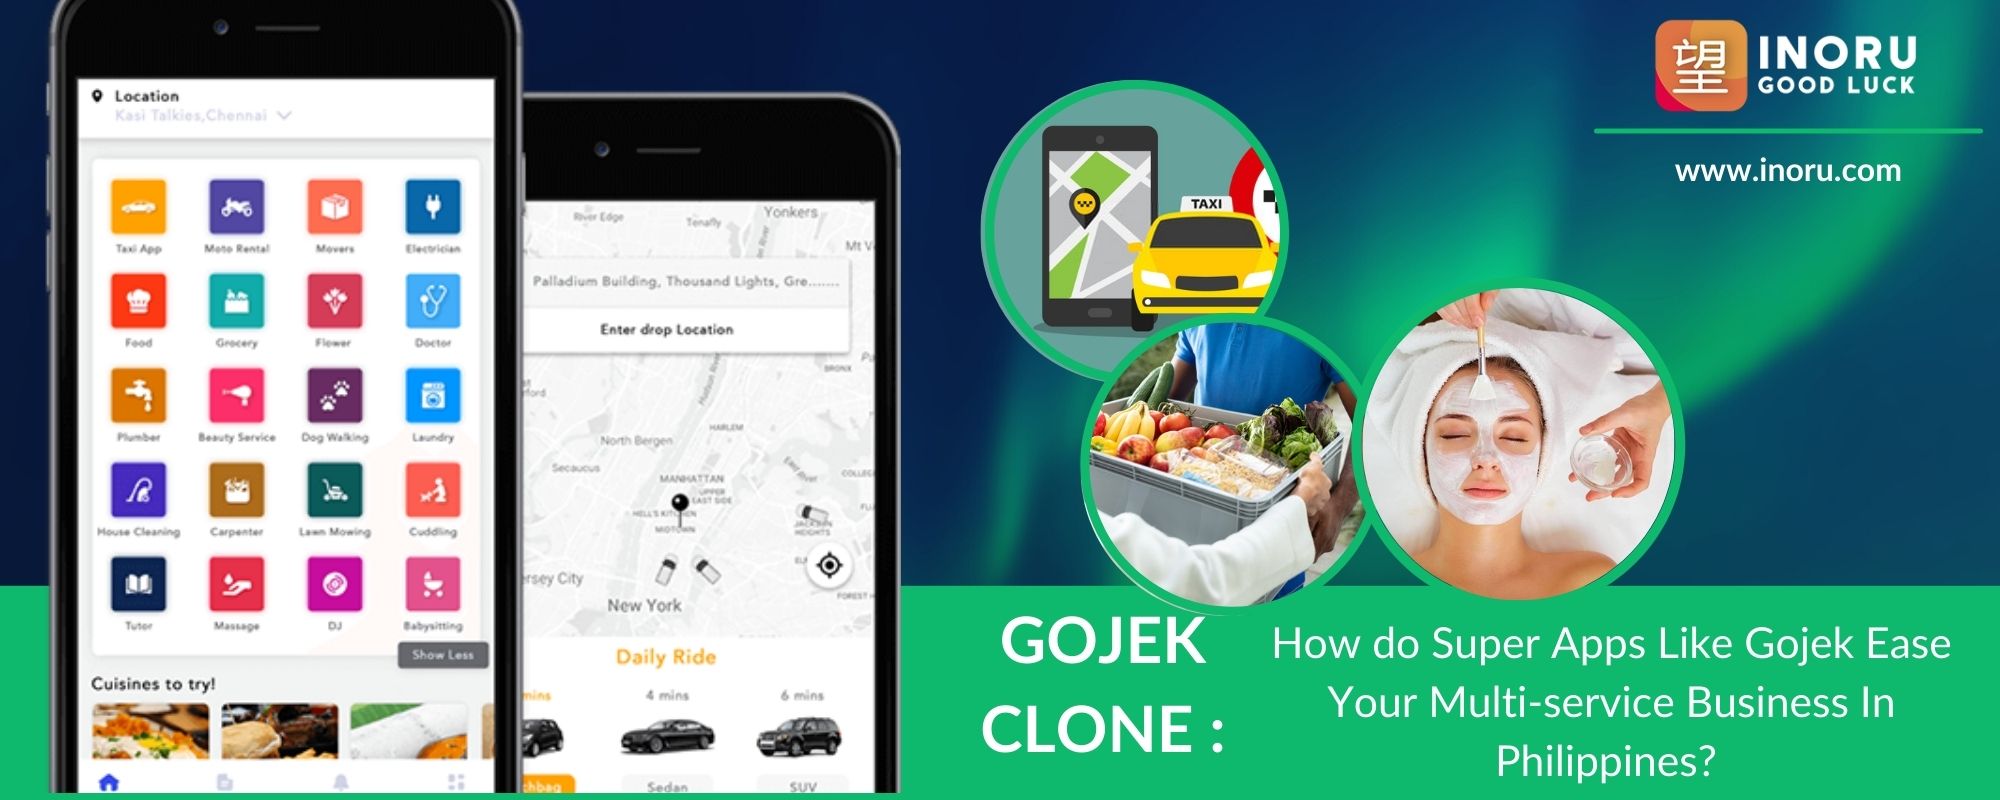 Super App Like Gojek